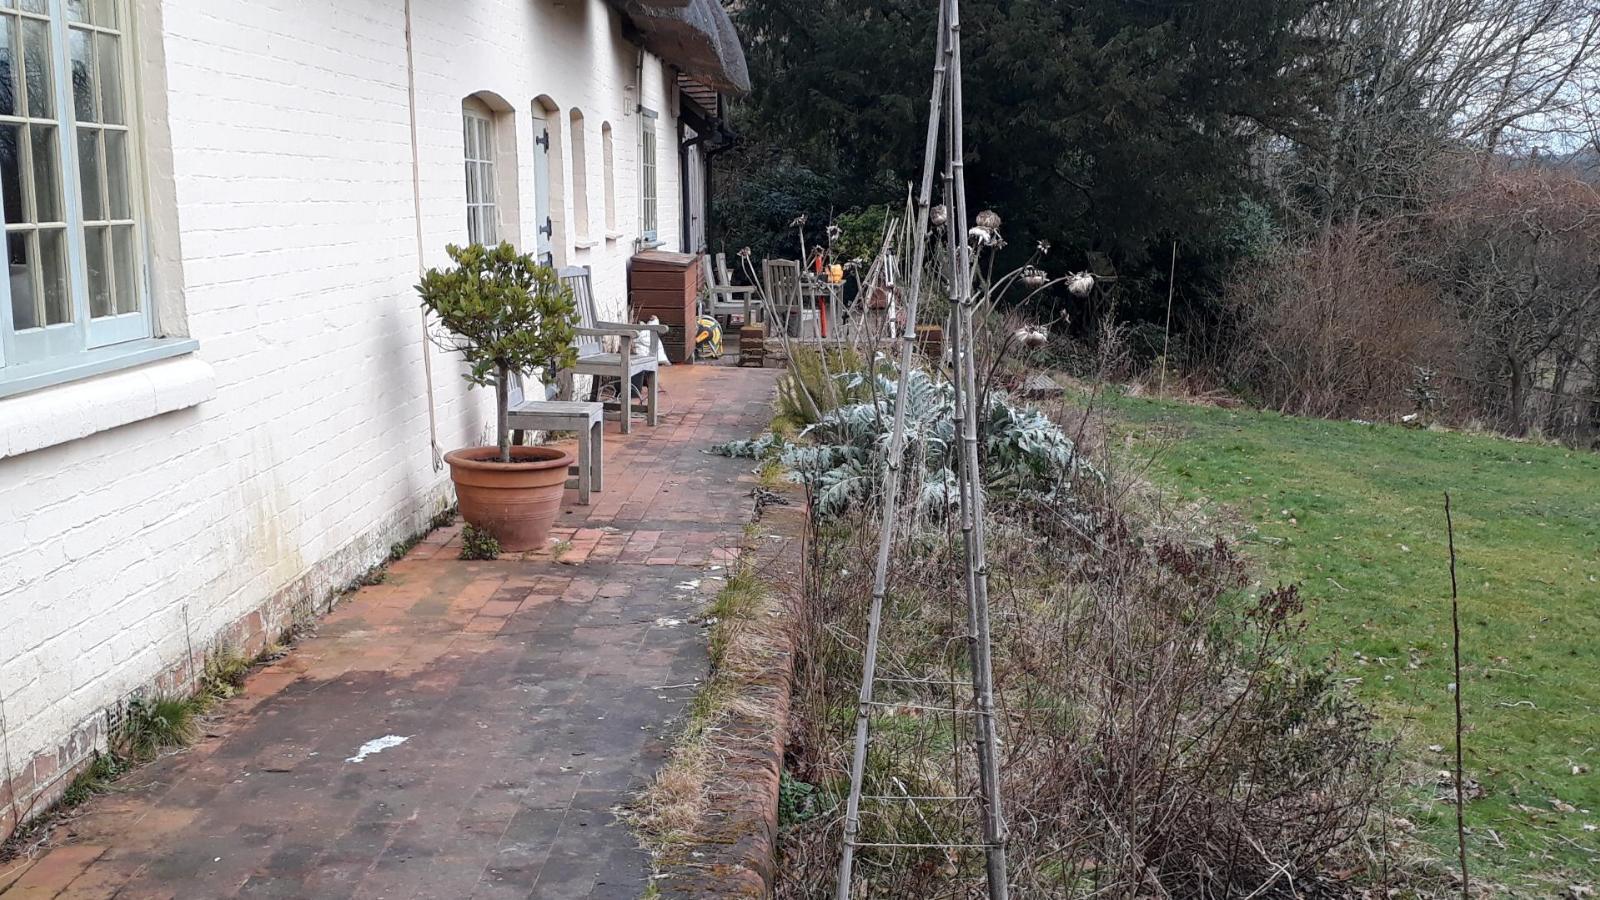 Alison Bockh Garden Design and Landscaping - North Devon - Patio in need of work